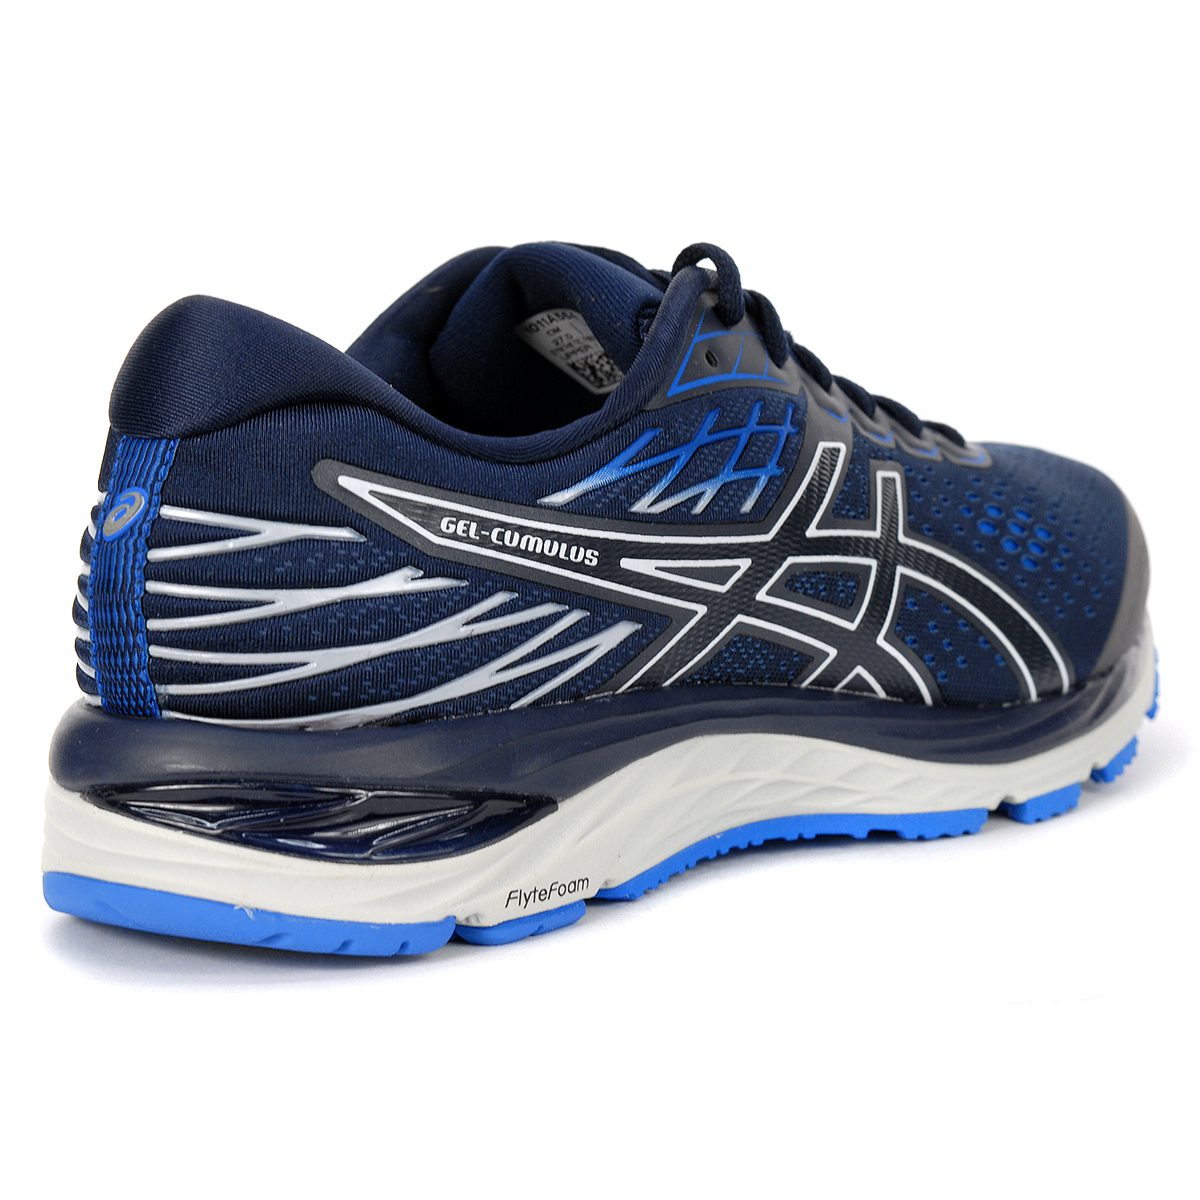 ASICS Men's GelCumulus 21 Midnight/Midnight Running Shoes 1011A551.402